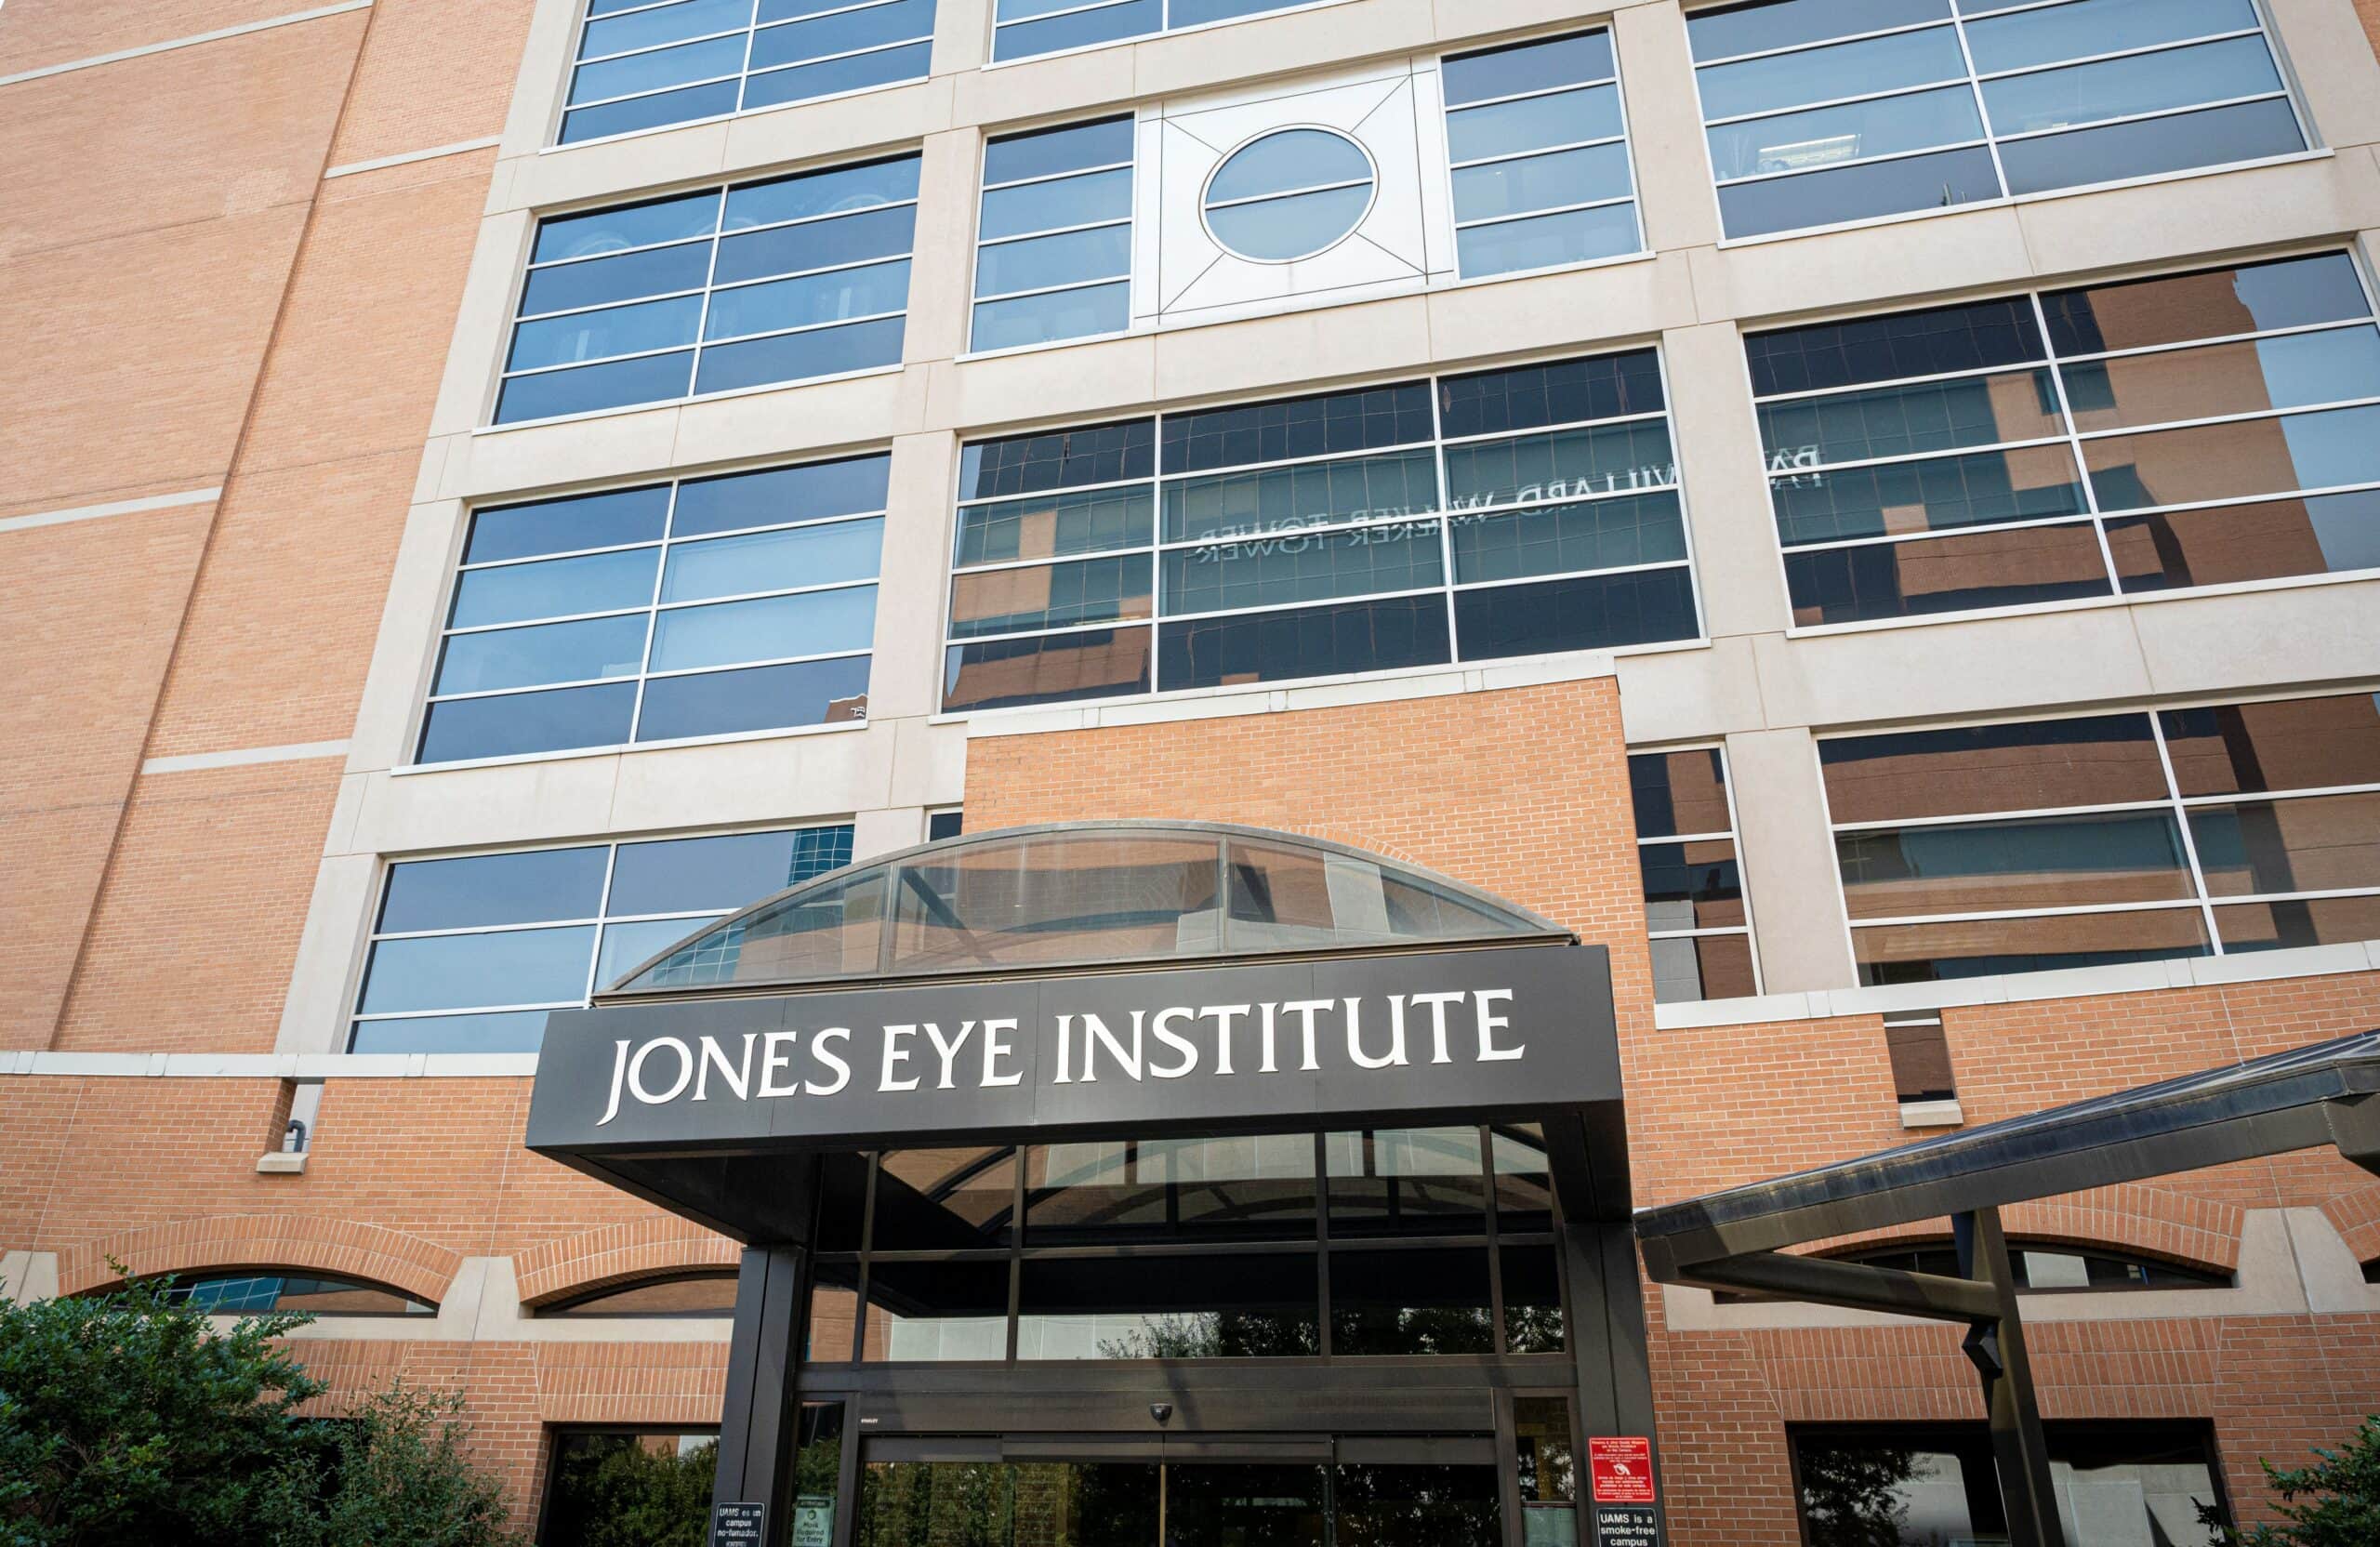 Jones Eye Institute